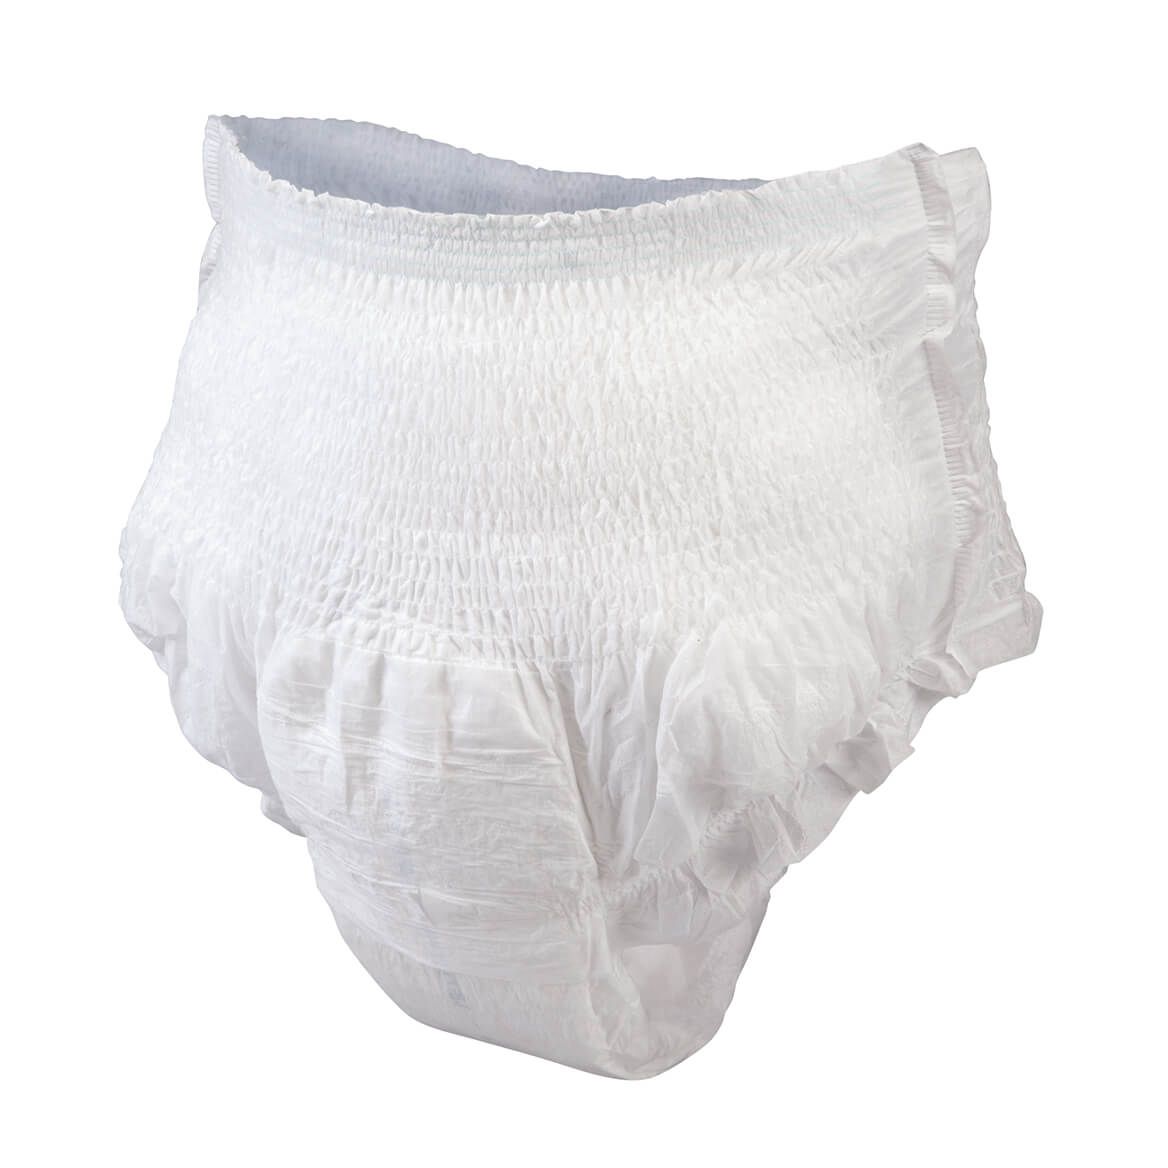 Unisex Overnight Protective Underwear, pkg. + '-' + 344824